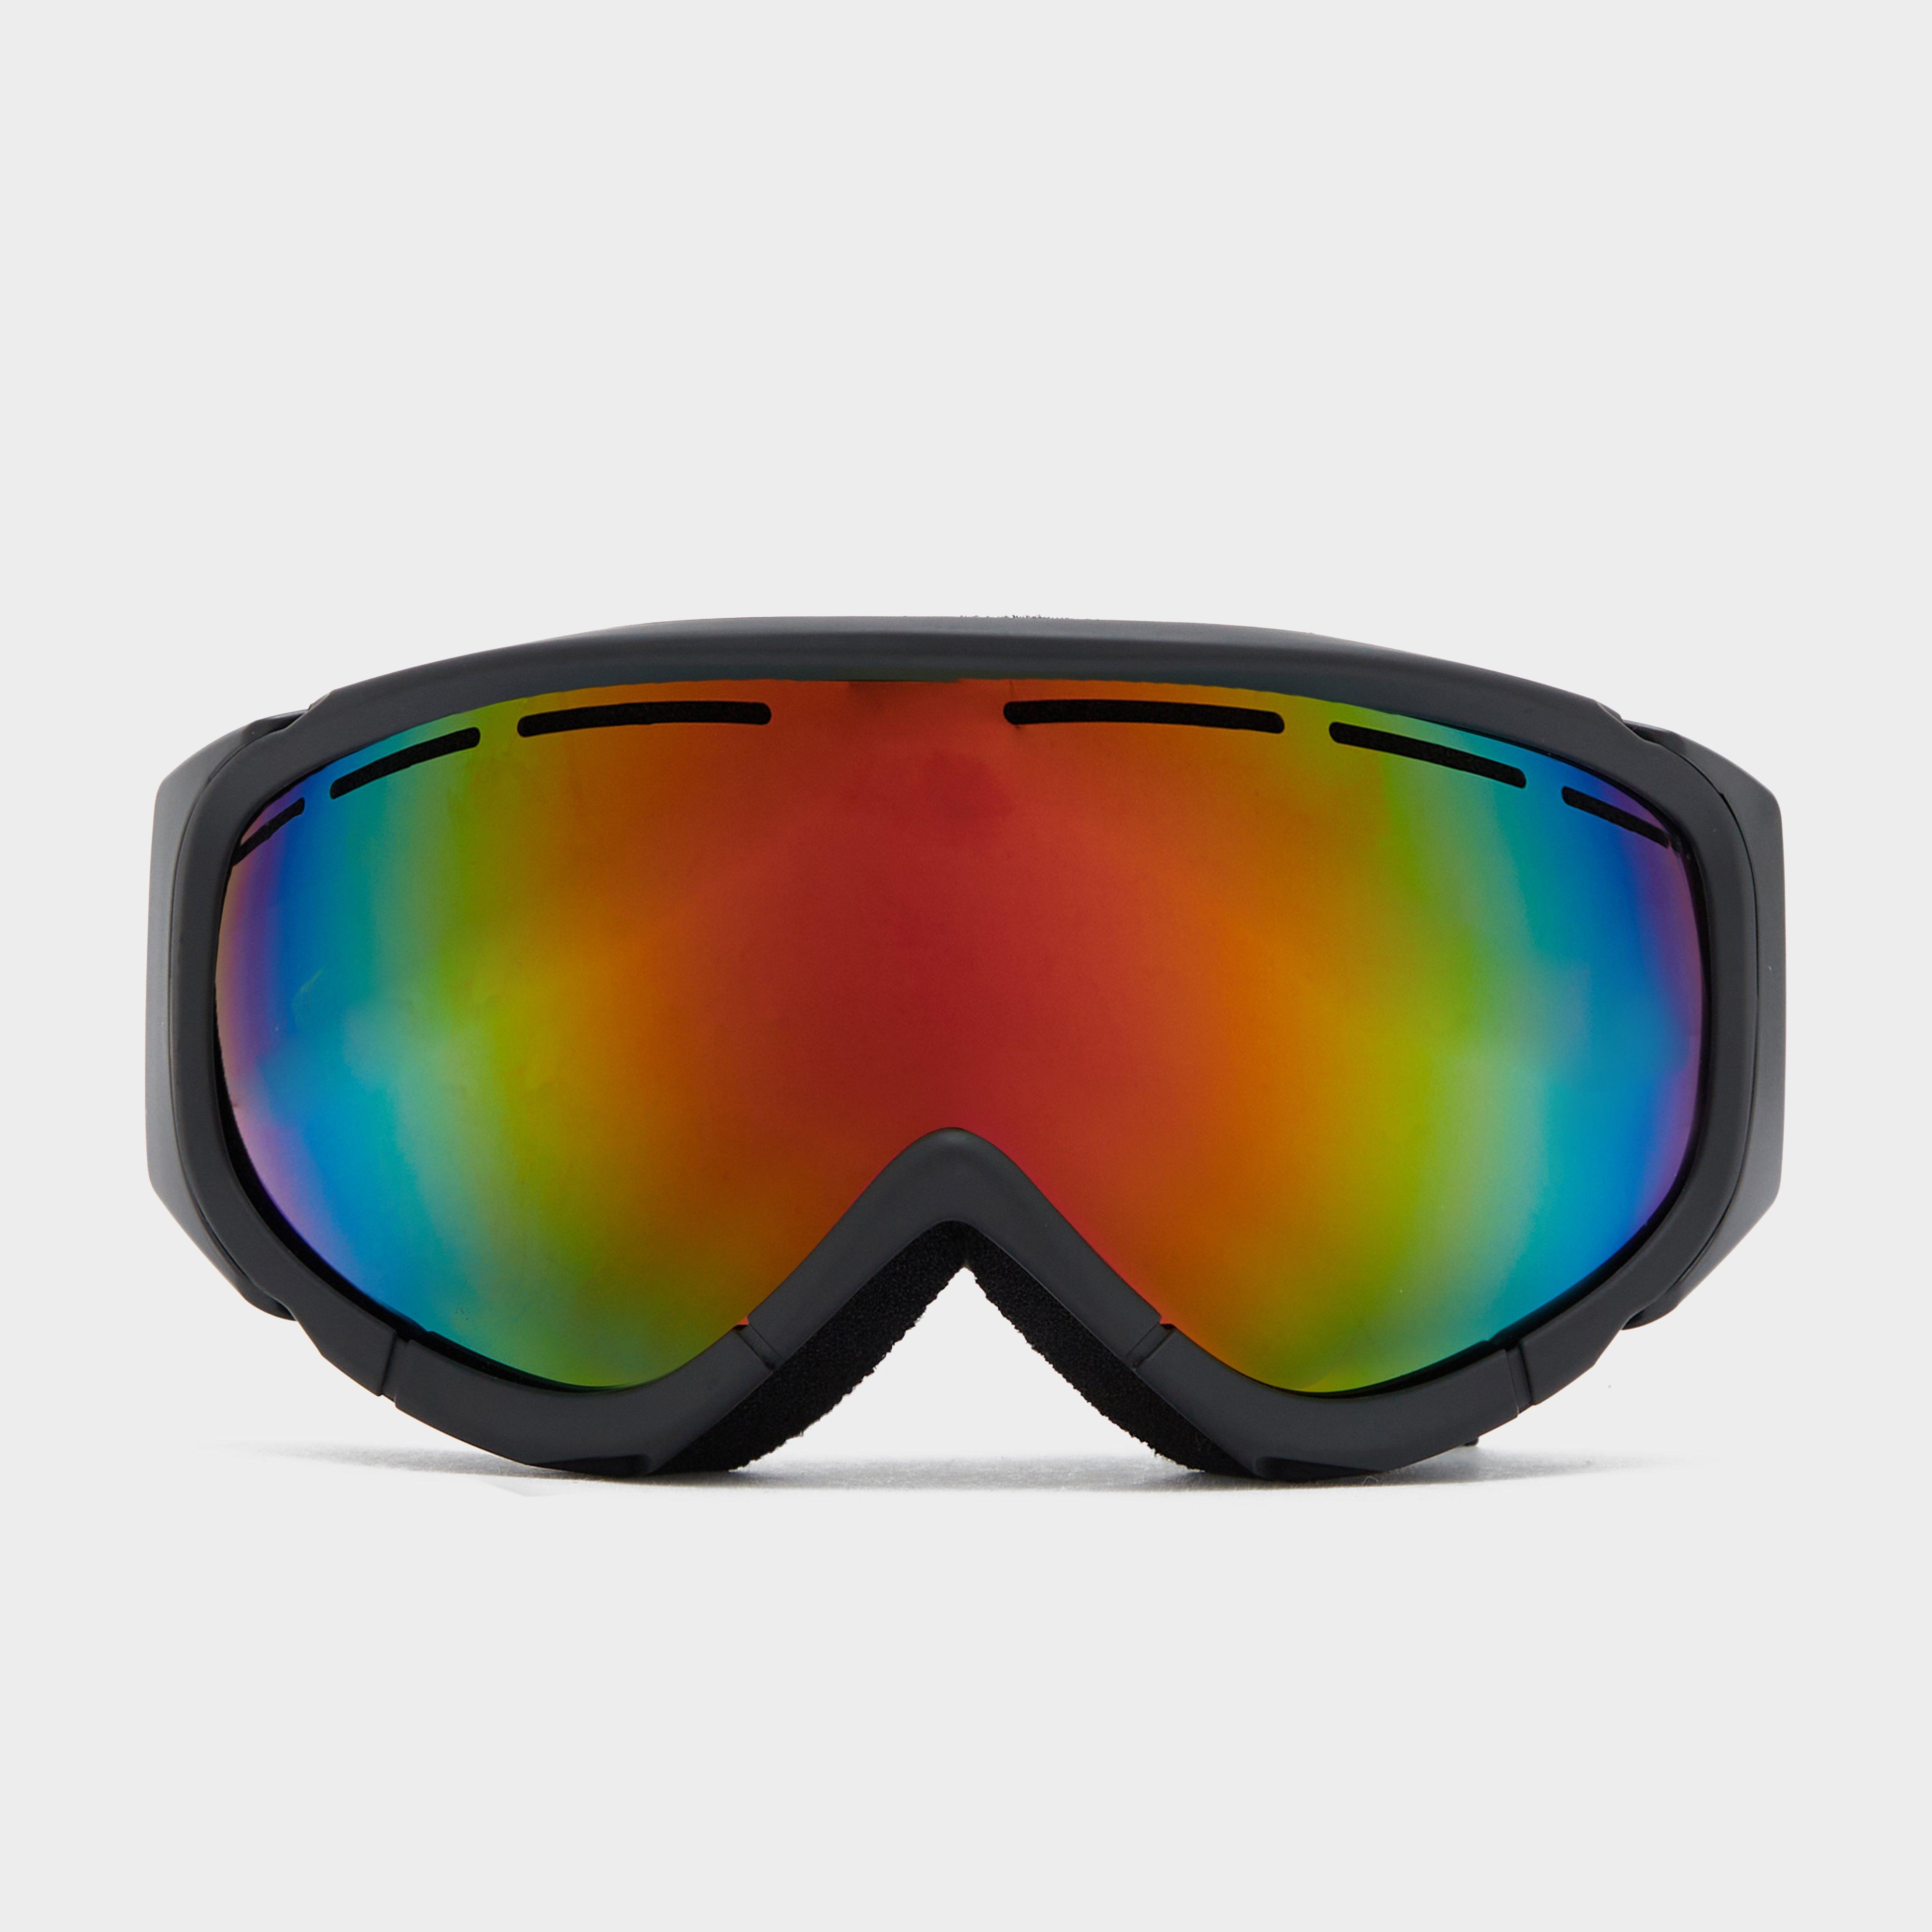  The Edge Unisex Piste Ski Goggles